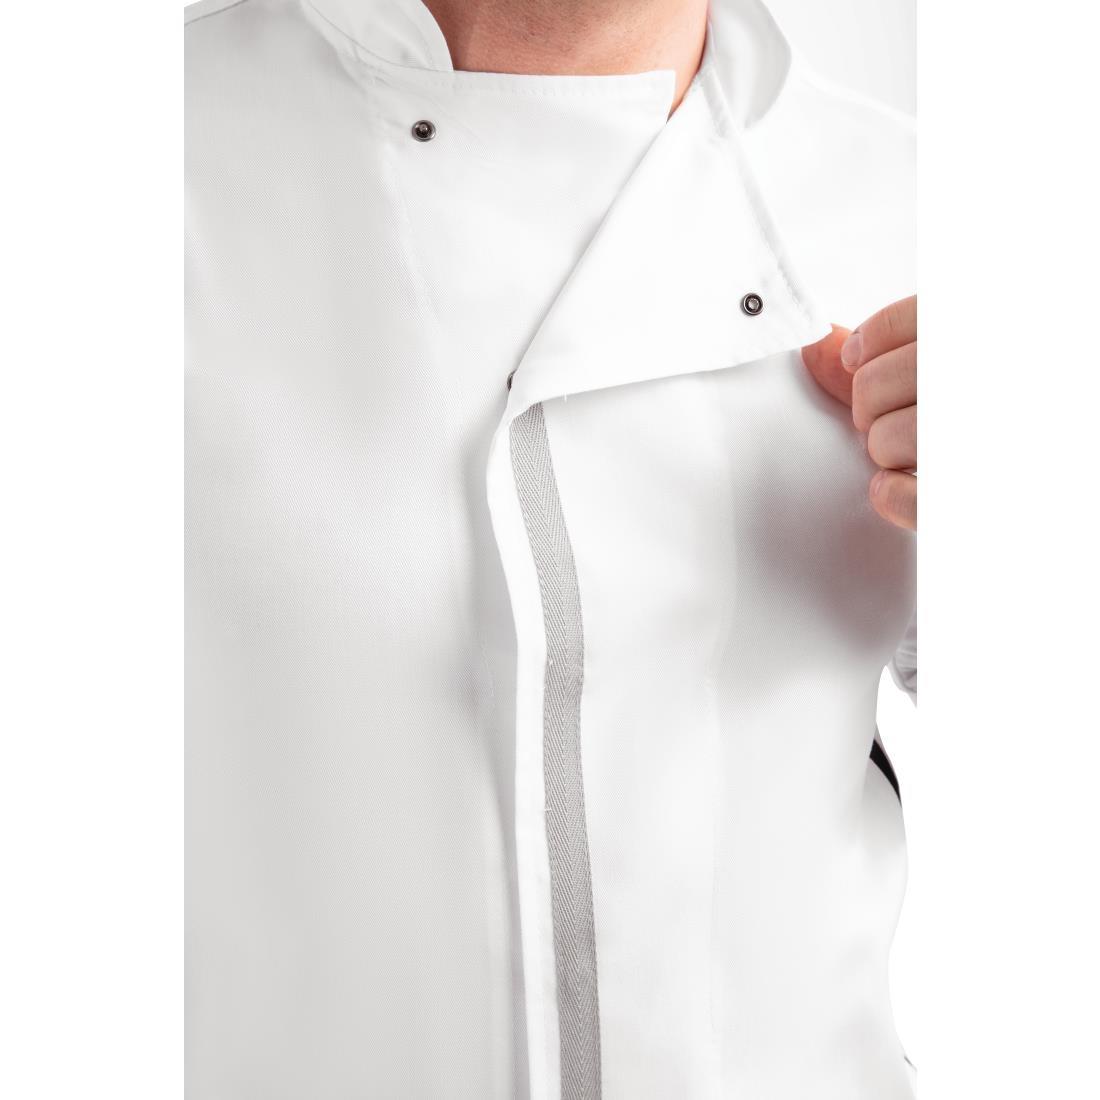 Southside Unisex Chefs Jacket Short Sleeve White XL - B998-XL  - 4